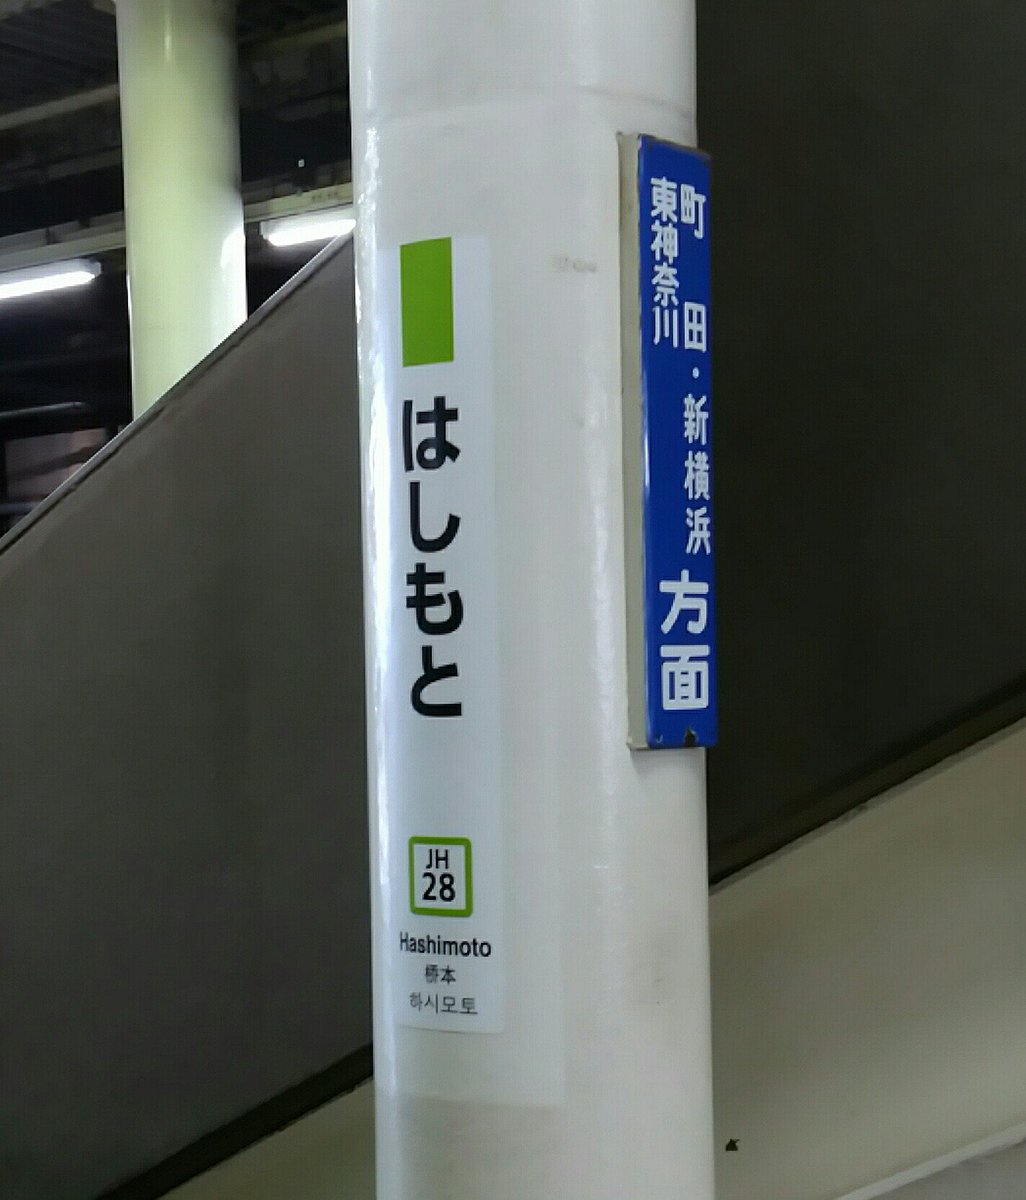 Cat Paw Puni Puni 横浜線橋本駅で発見 一つの柱に最新型の縦型駅名標と 国鉄時代からあると思われる琺瑯製の行き先案内板が共存 もじ鉄